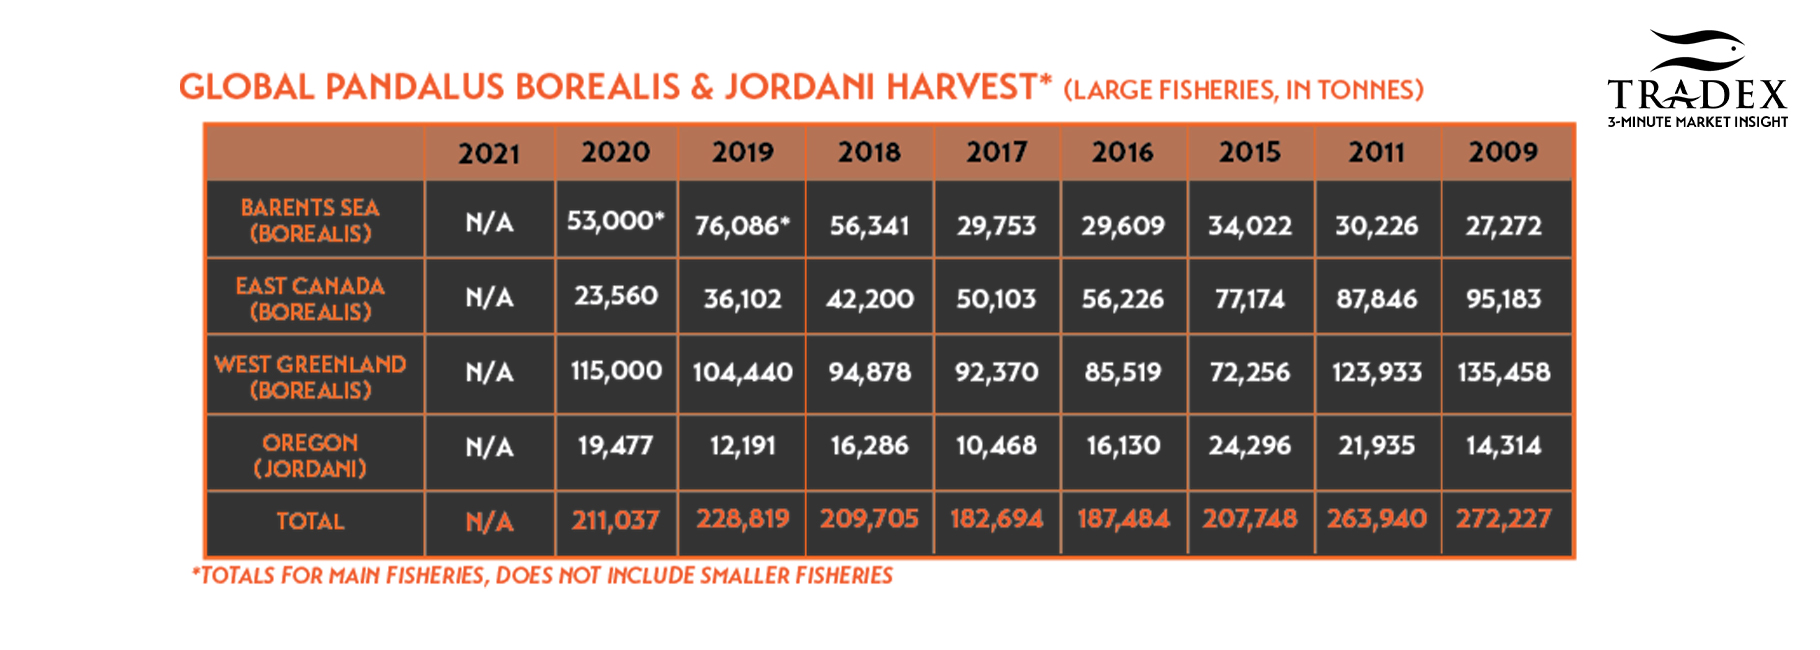 Global Pandalus borealis & jordani Harvest